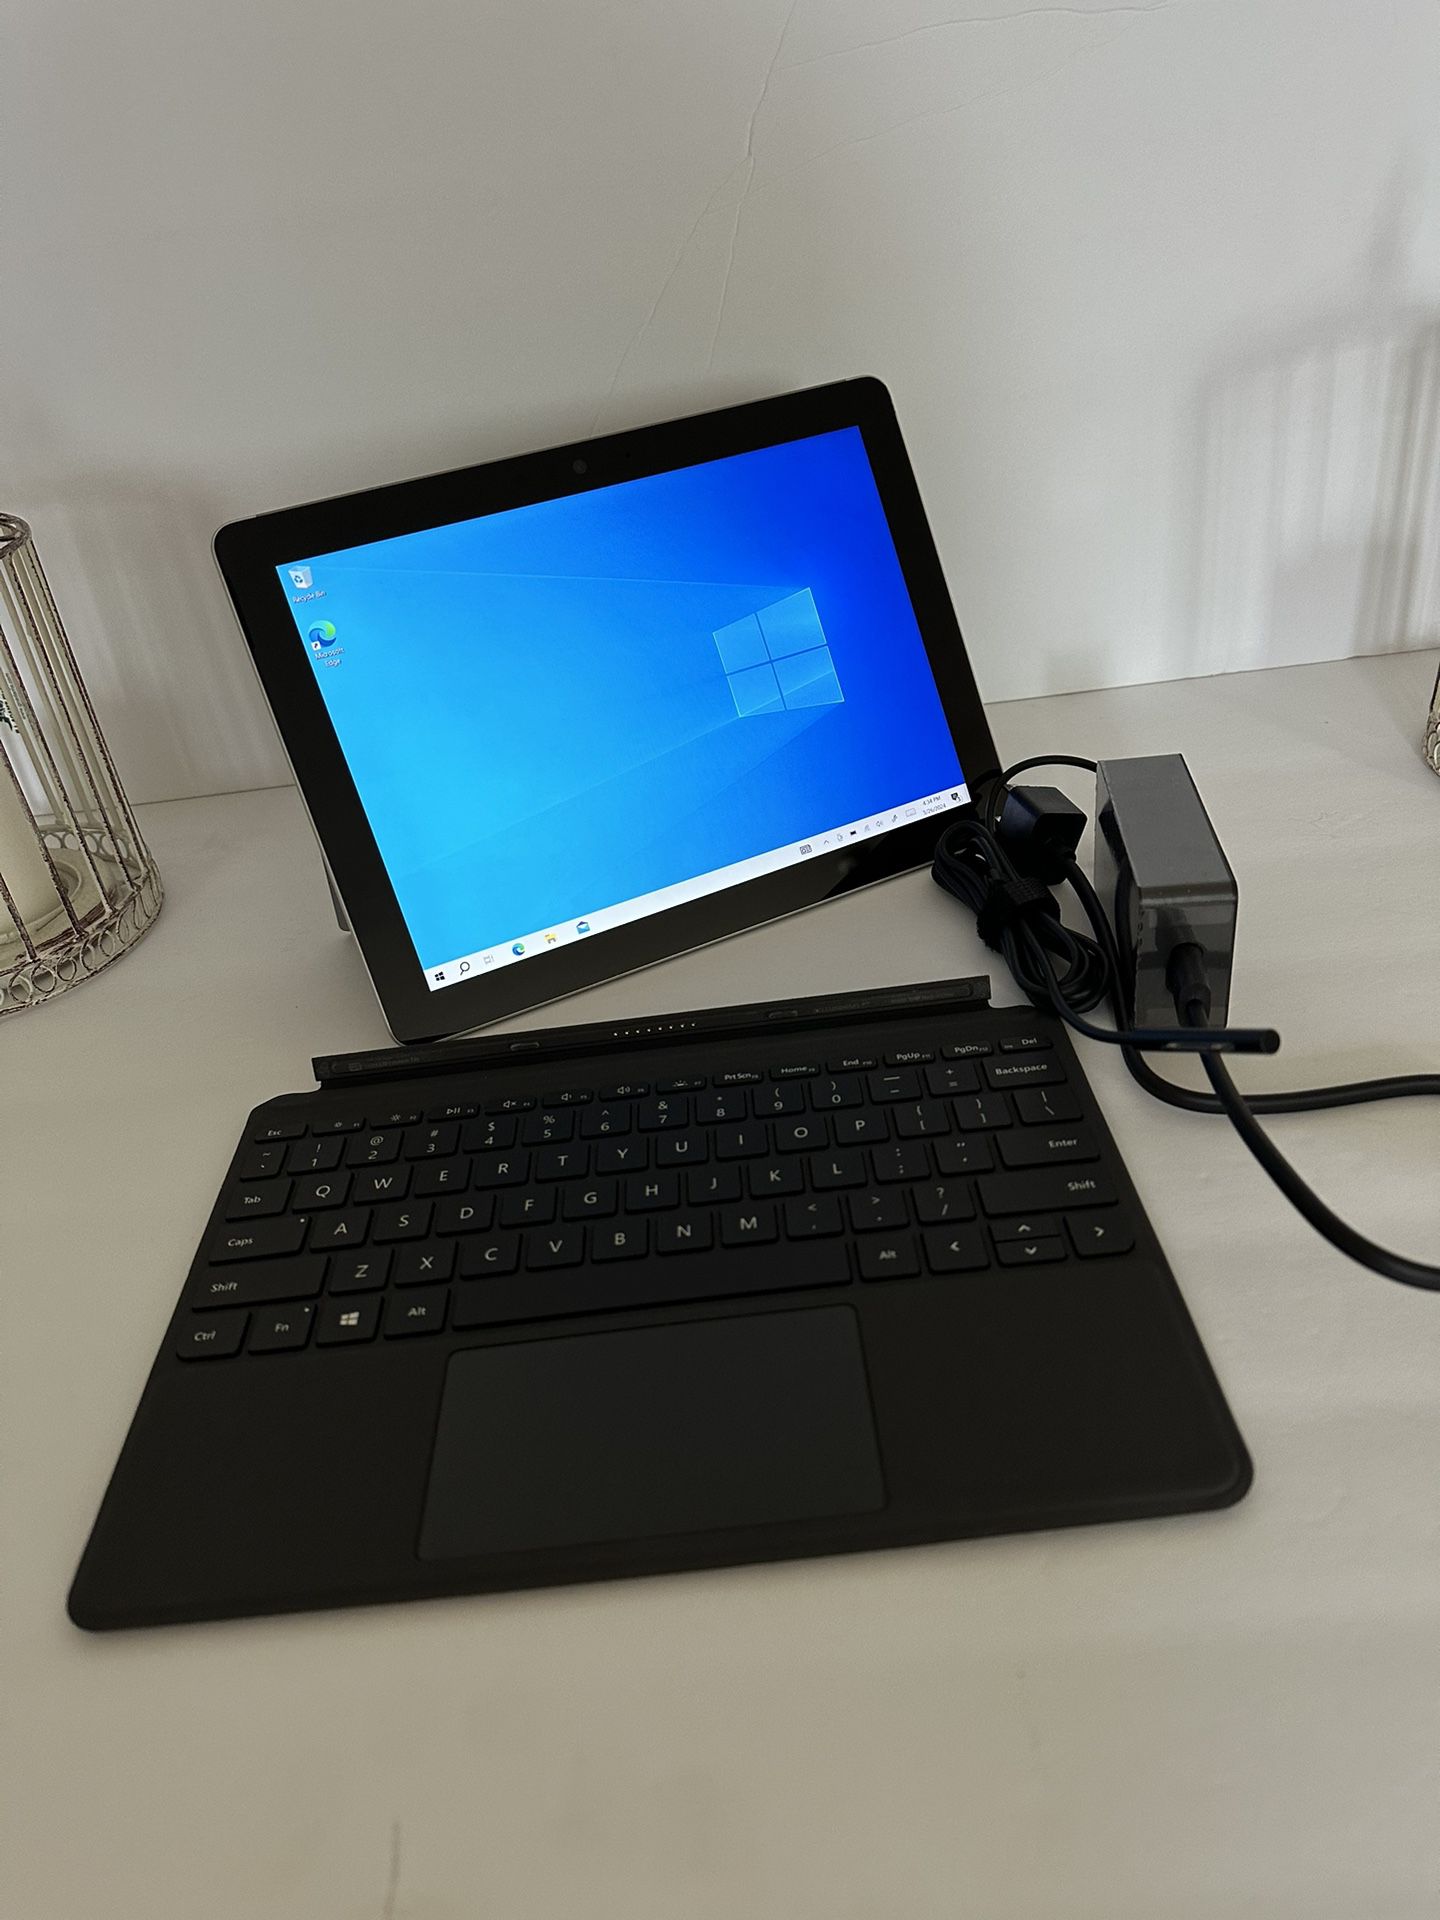 Microsoft Surface Go W/ Keyboard Model 1825 Working Great 